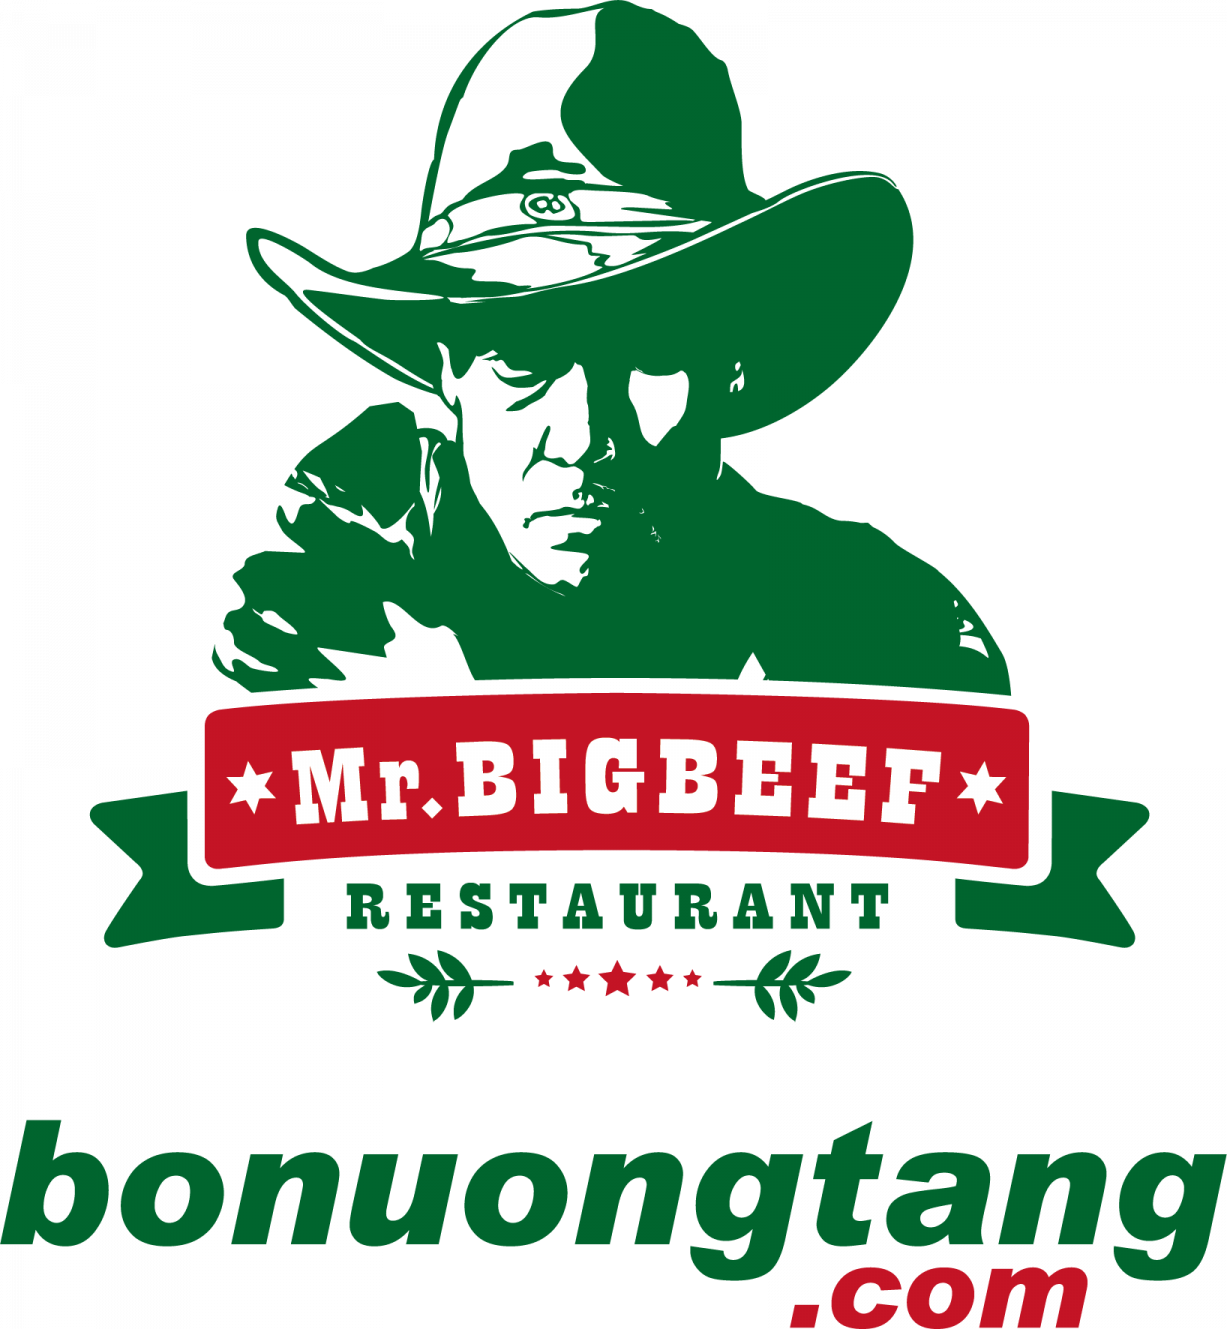 Big Beef Restaurant (mới khai trương)